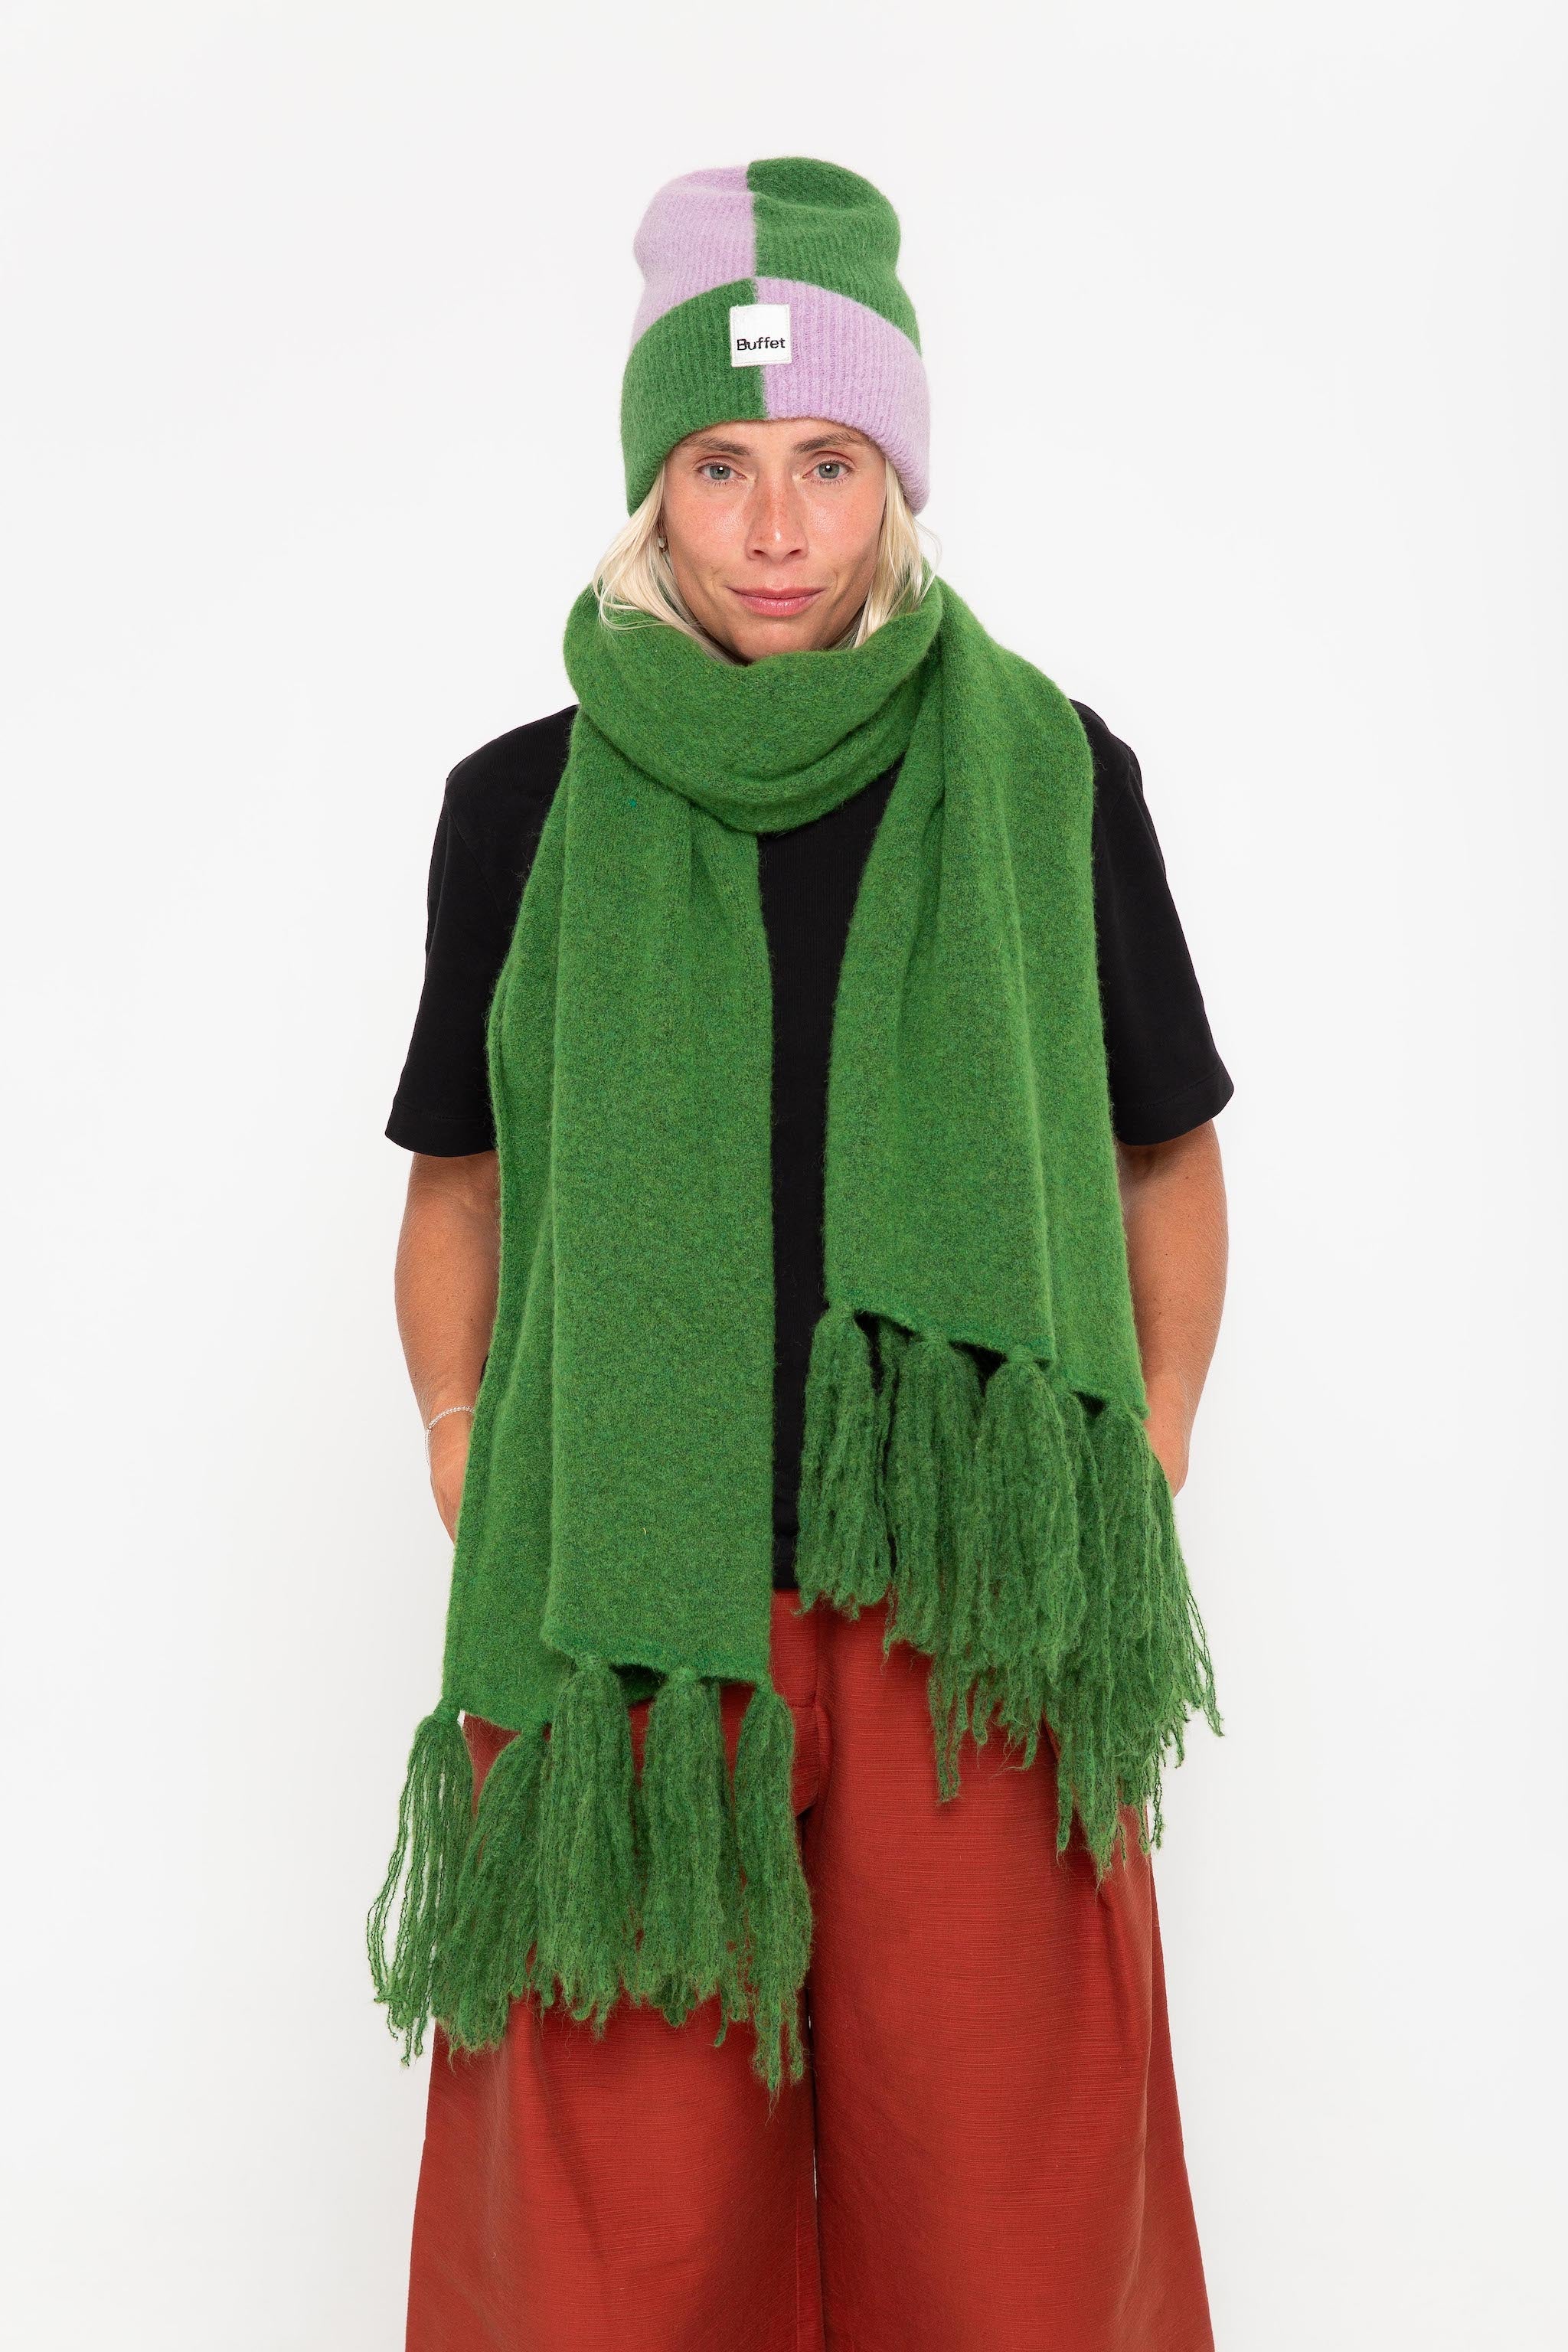 Green alpaca maxi scarf